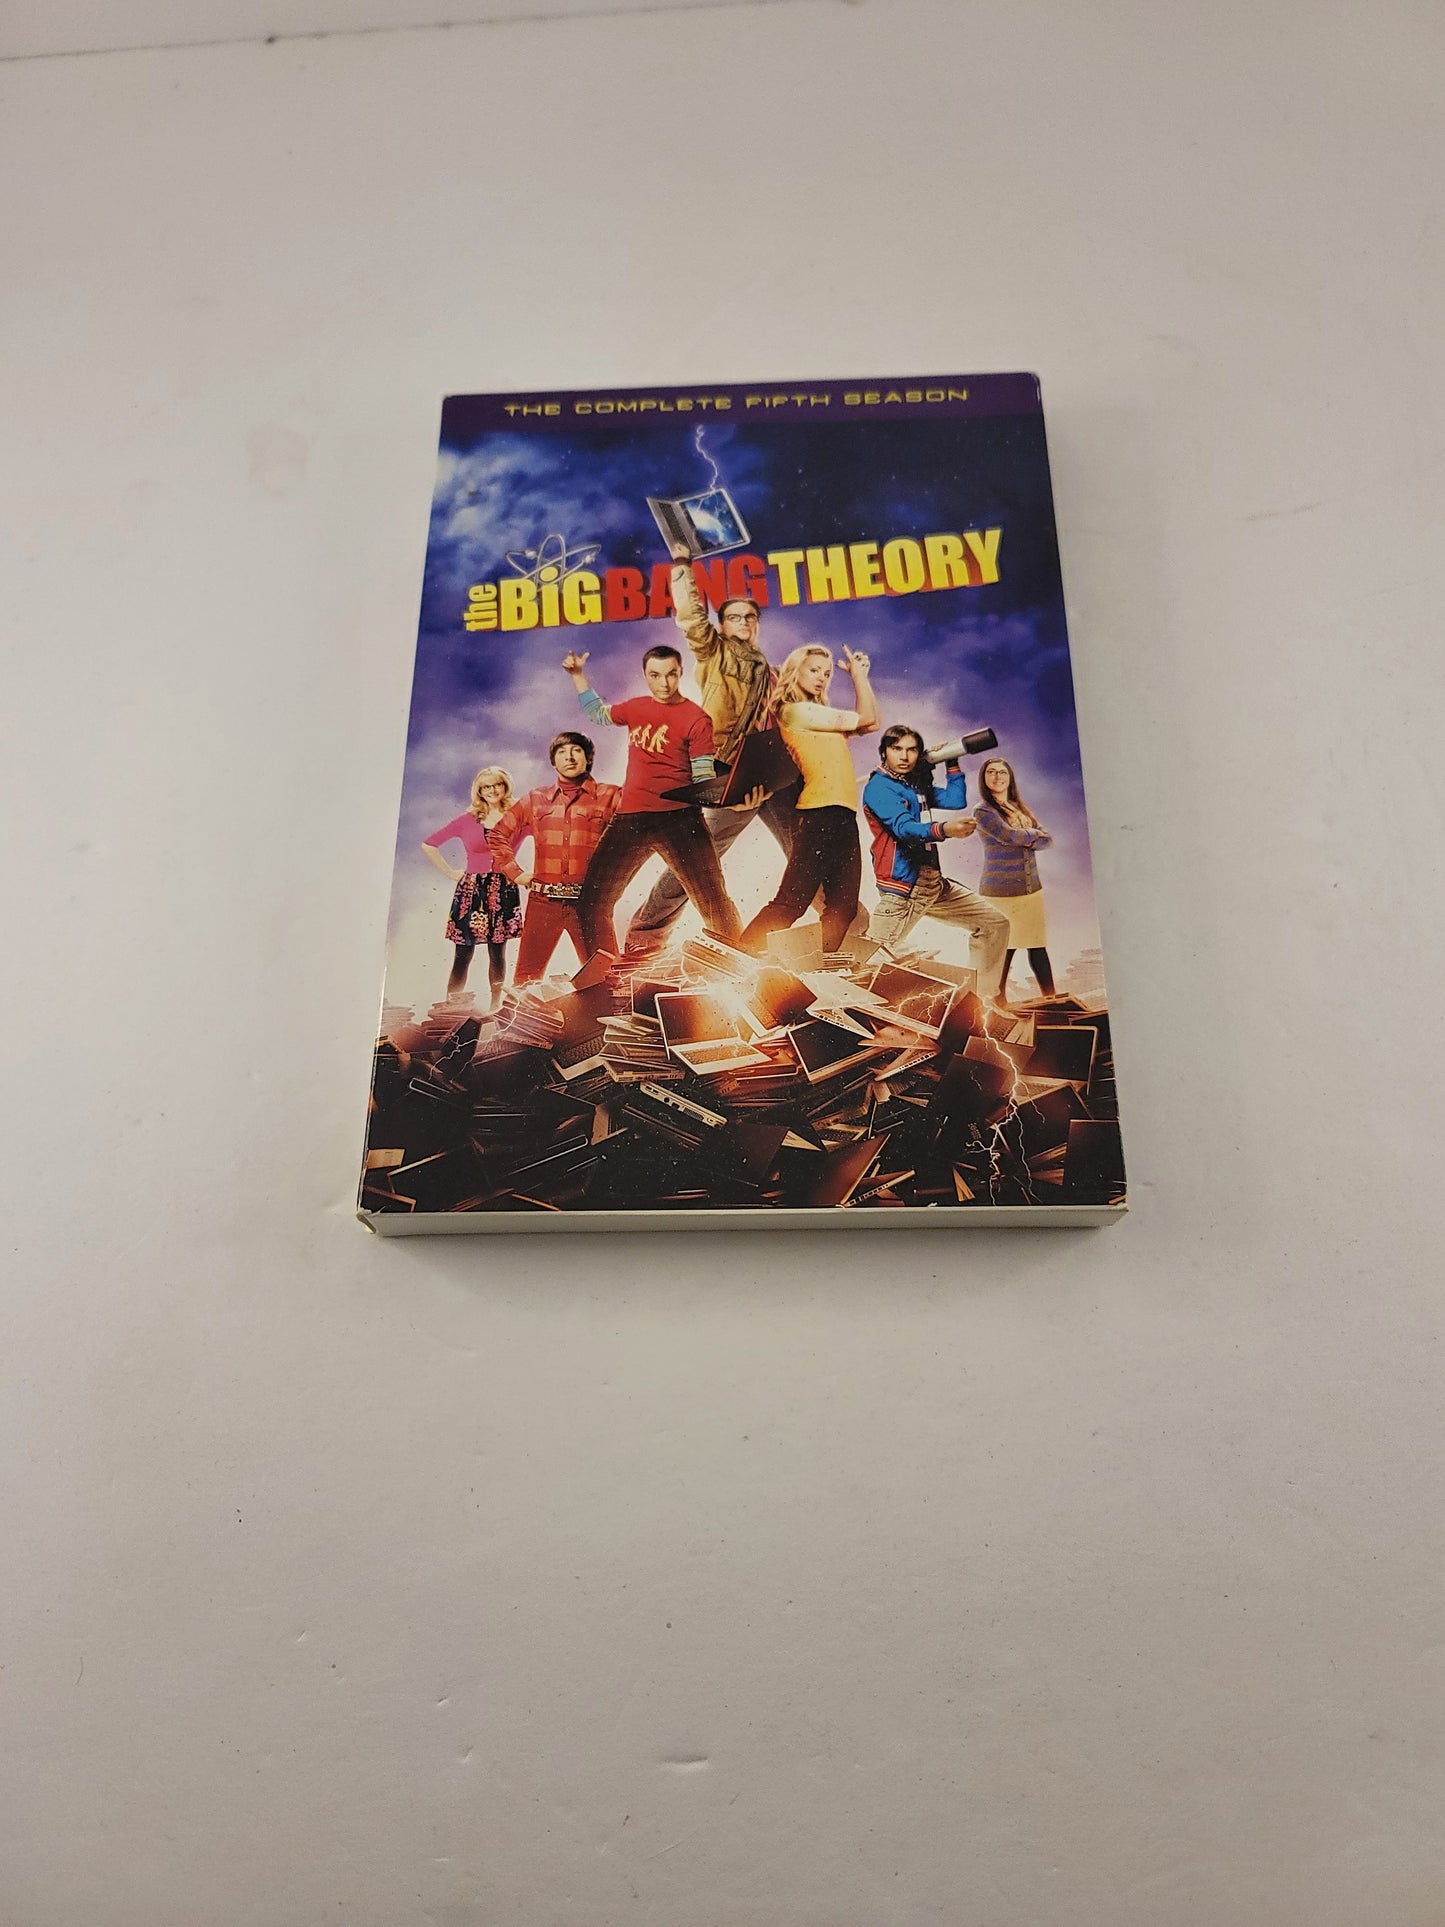 The Big Bang Theory Season 5 DVD